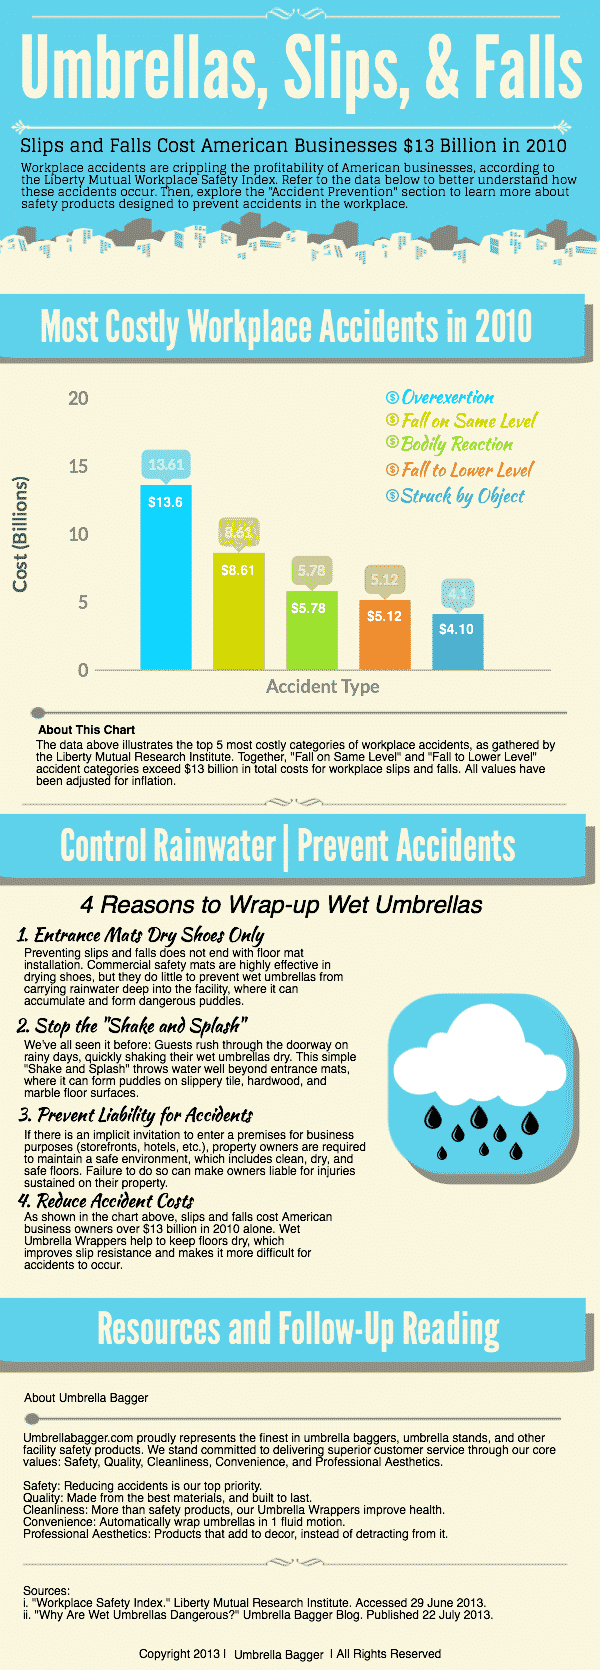 Free-Infographic-Umbrellas-Slips-Falls